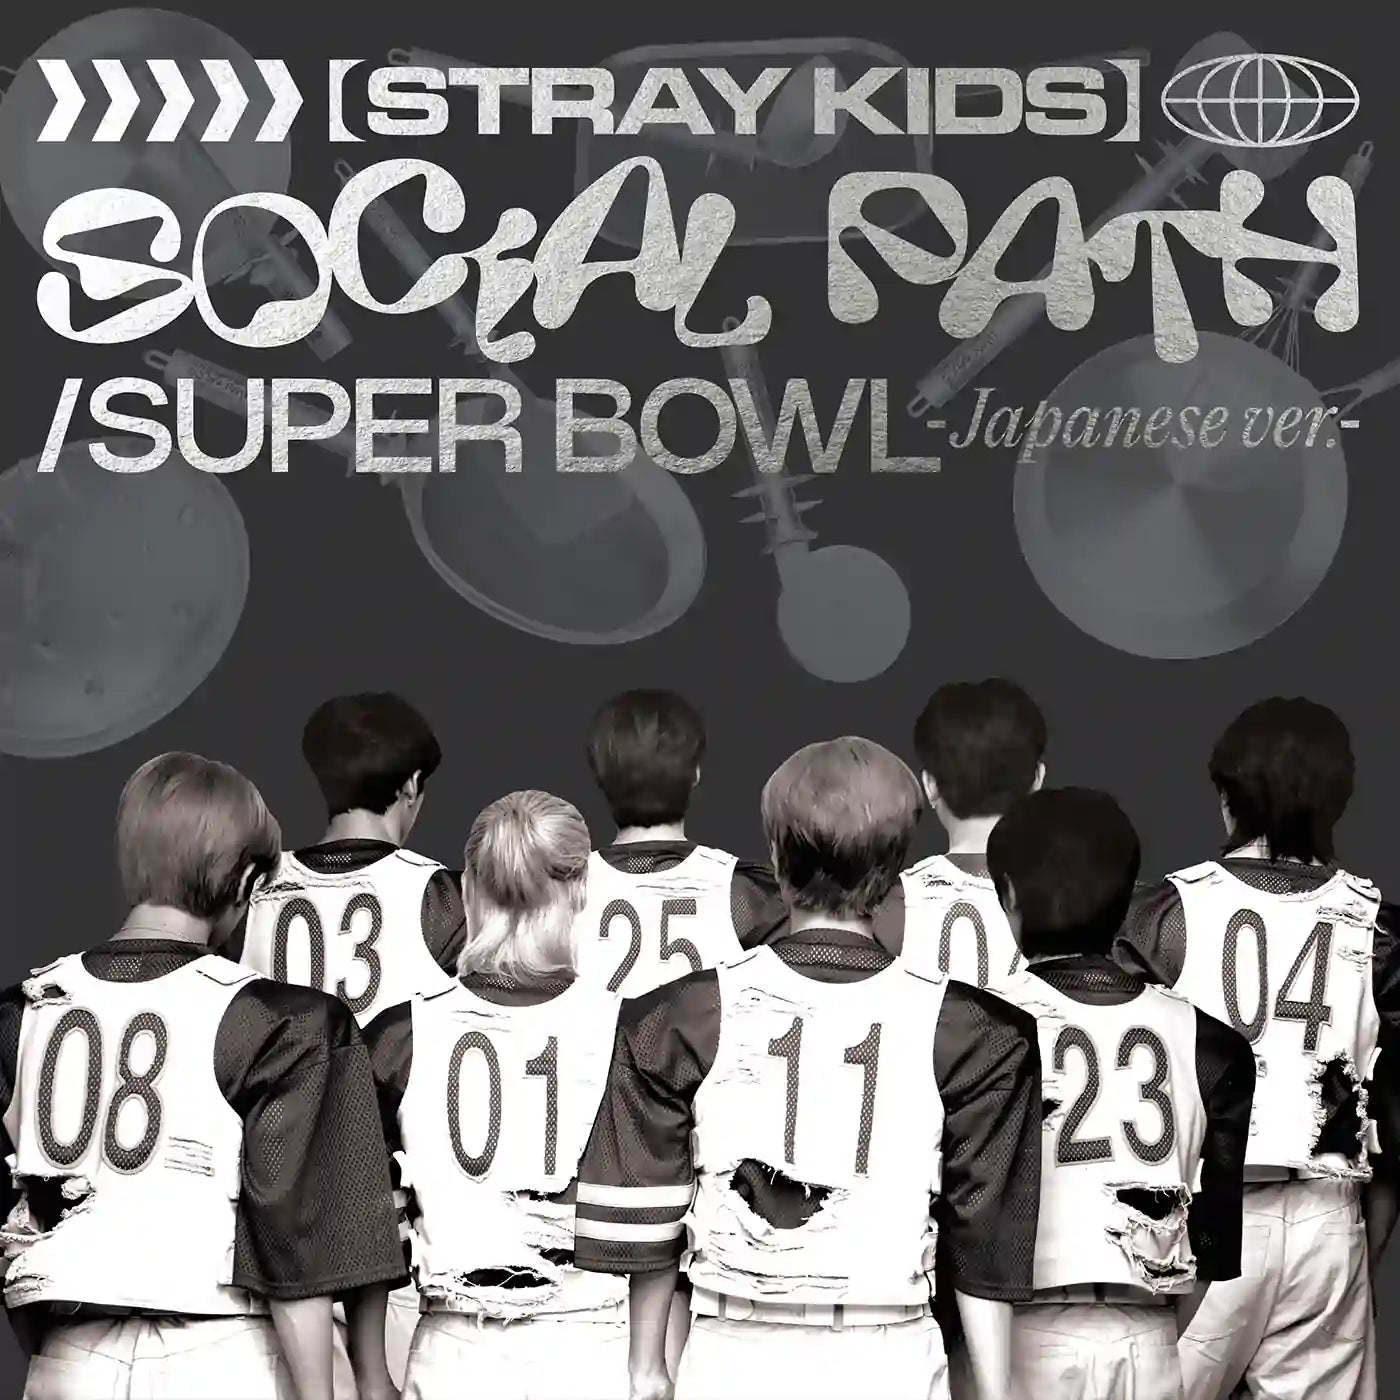 Stray Kids – Social Path (feat. LiSA) / Super Bowl (Japanese ver) [Standard Edition]